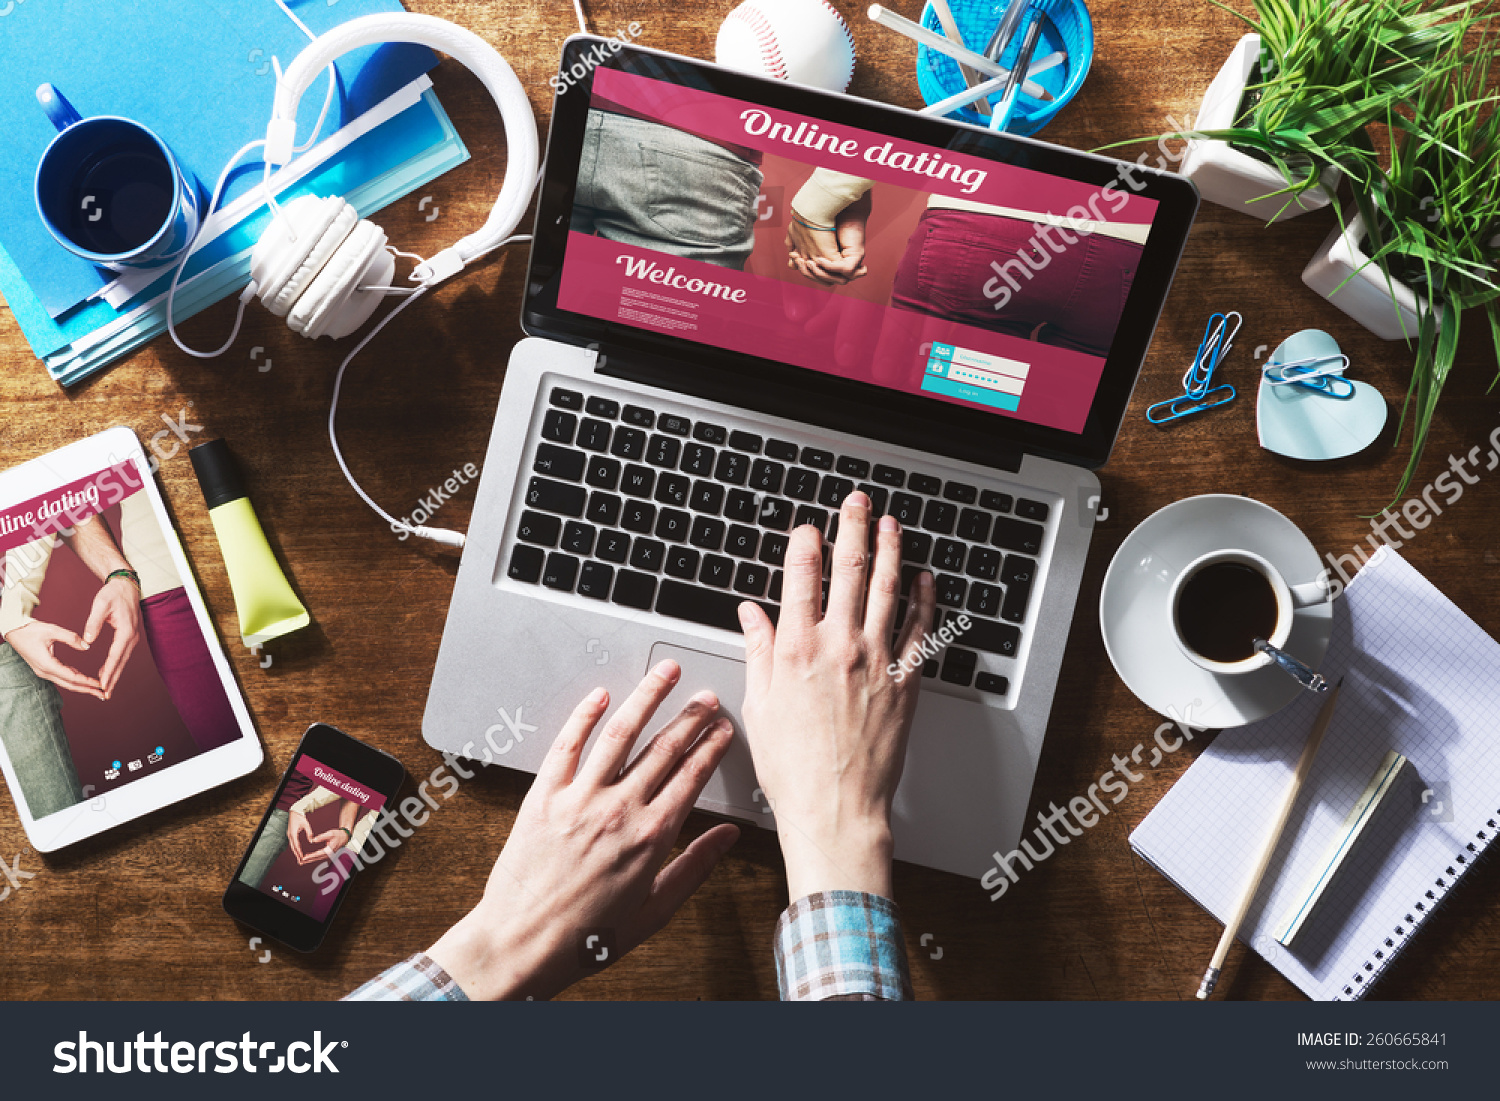 Online dating website on a laptop display, hardwood desktop and stationery on background #260665841